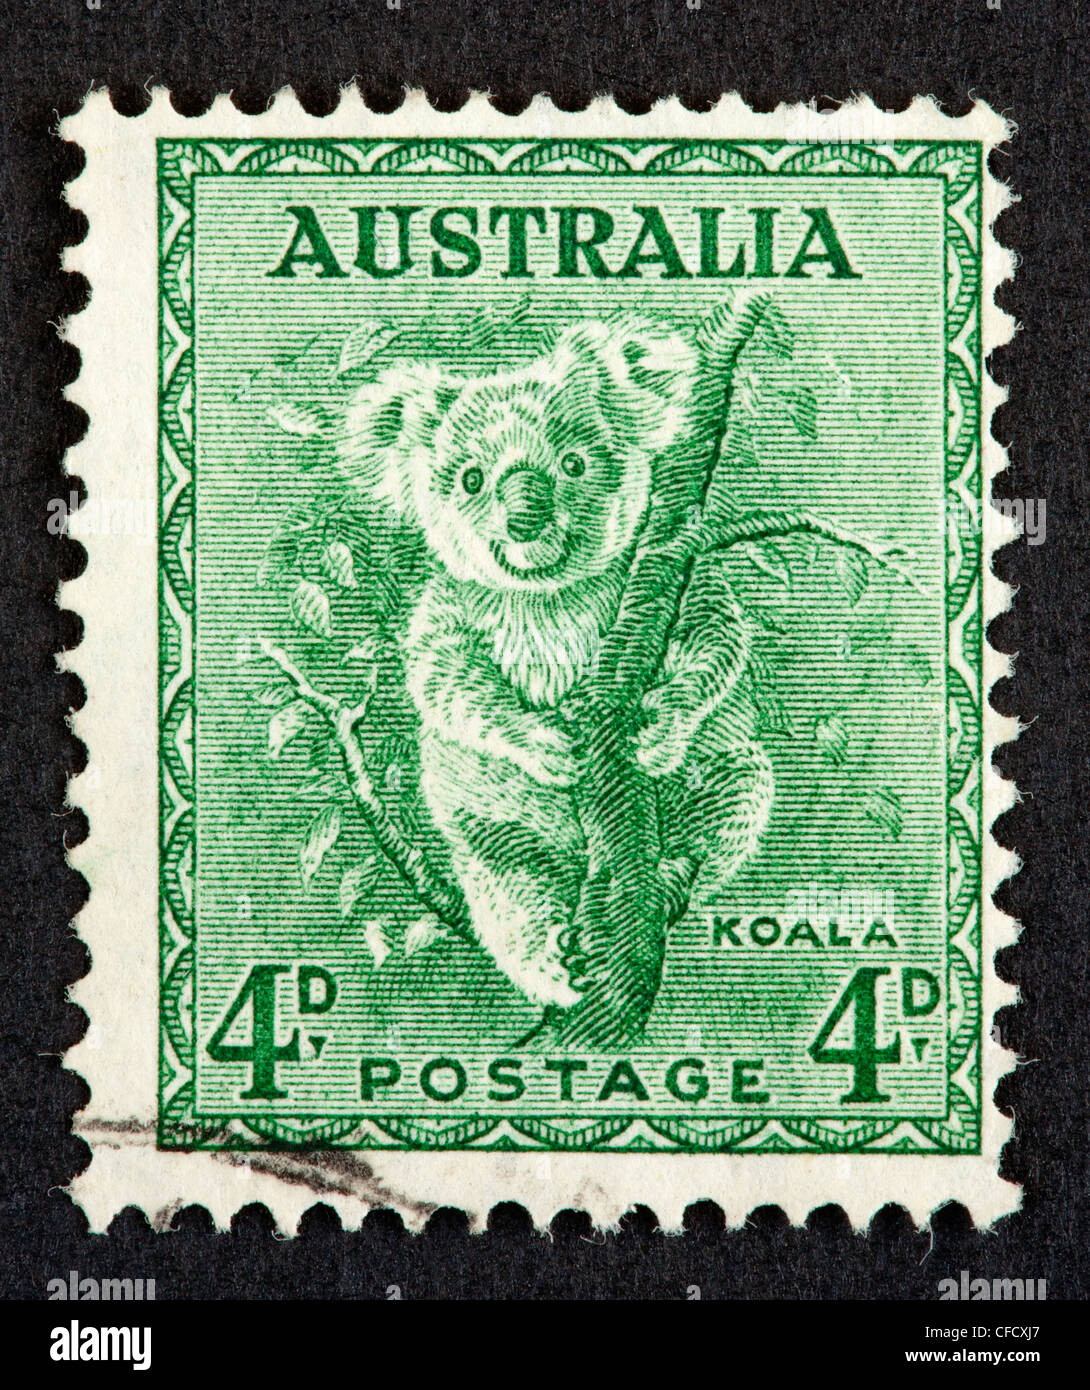 Australian postage stamp Stock Photo - Alamy